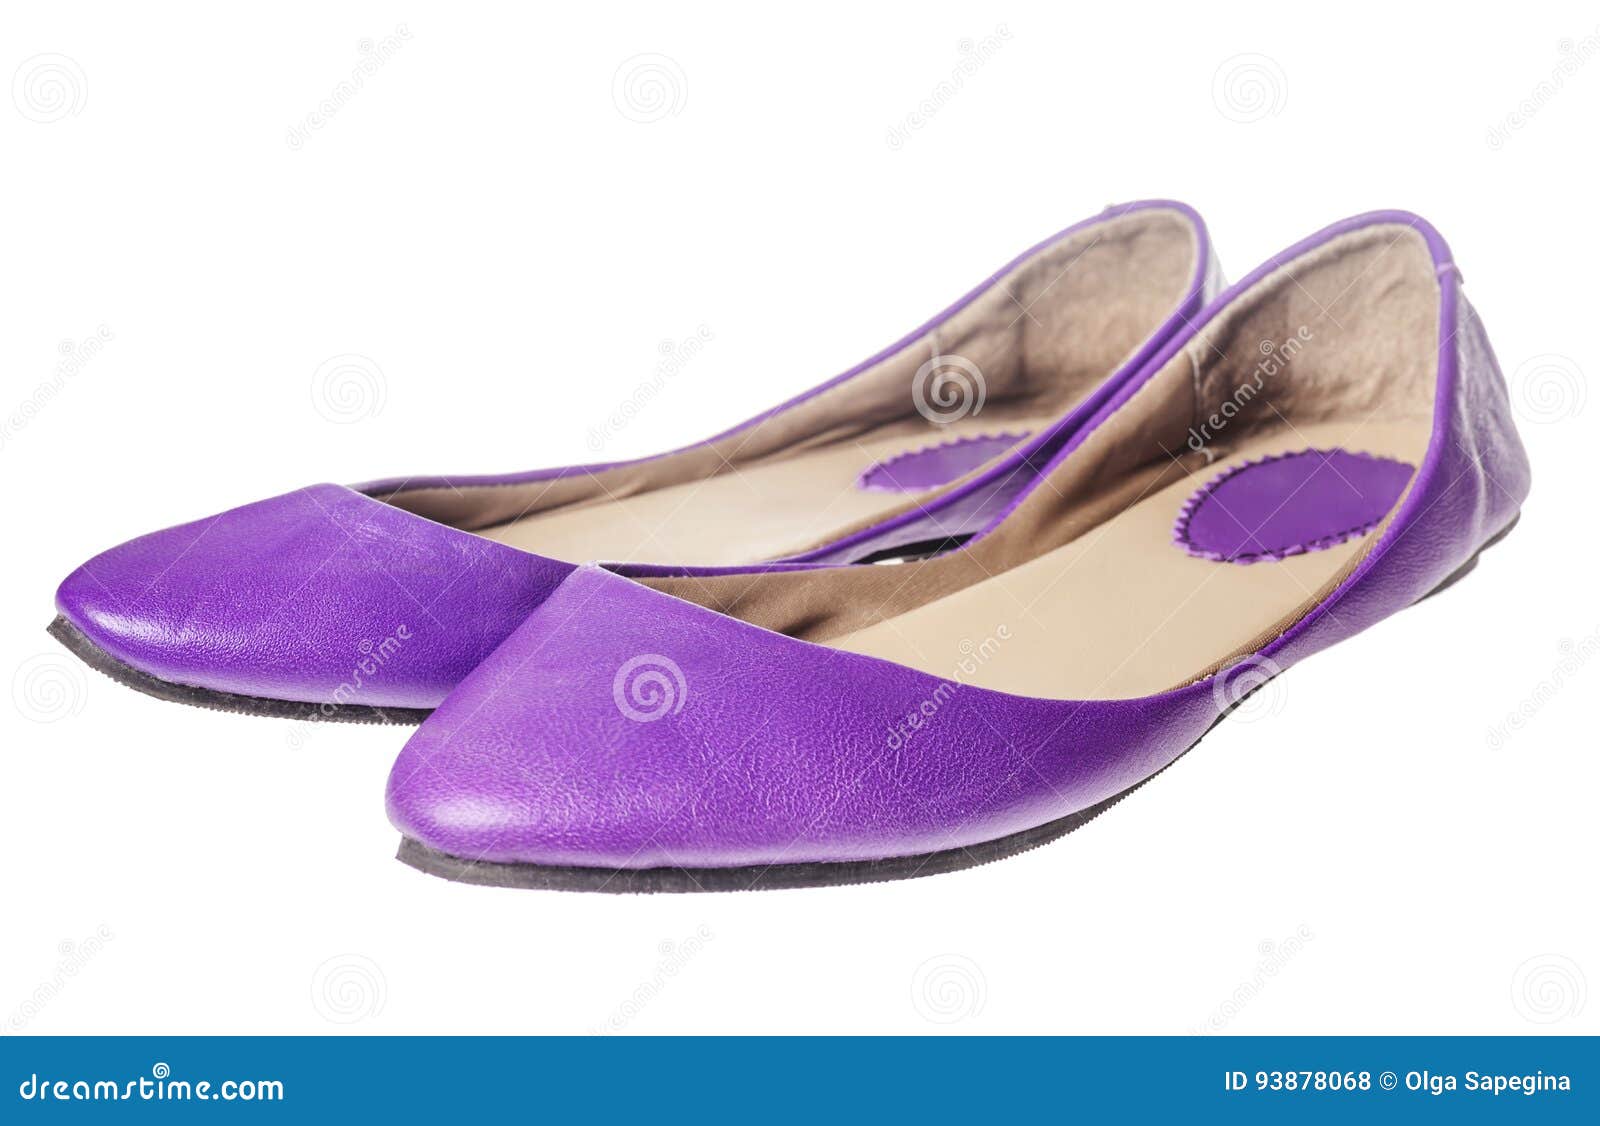 Leather flat shoes stock photo. Image of flats, elegance - 93878068